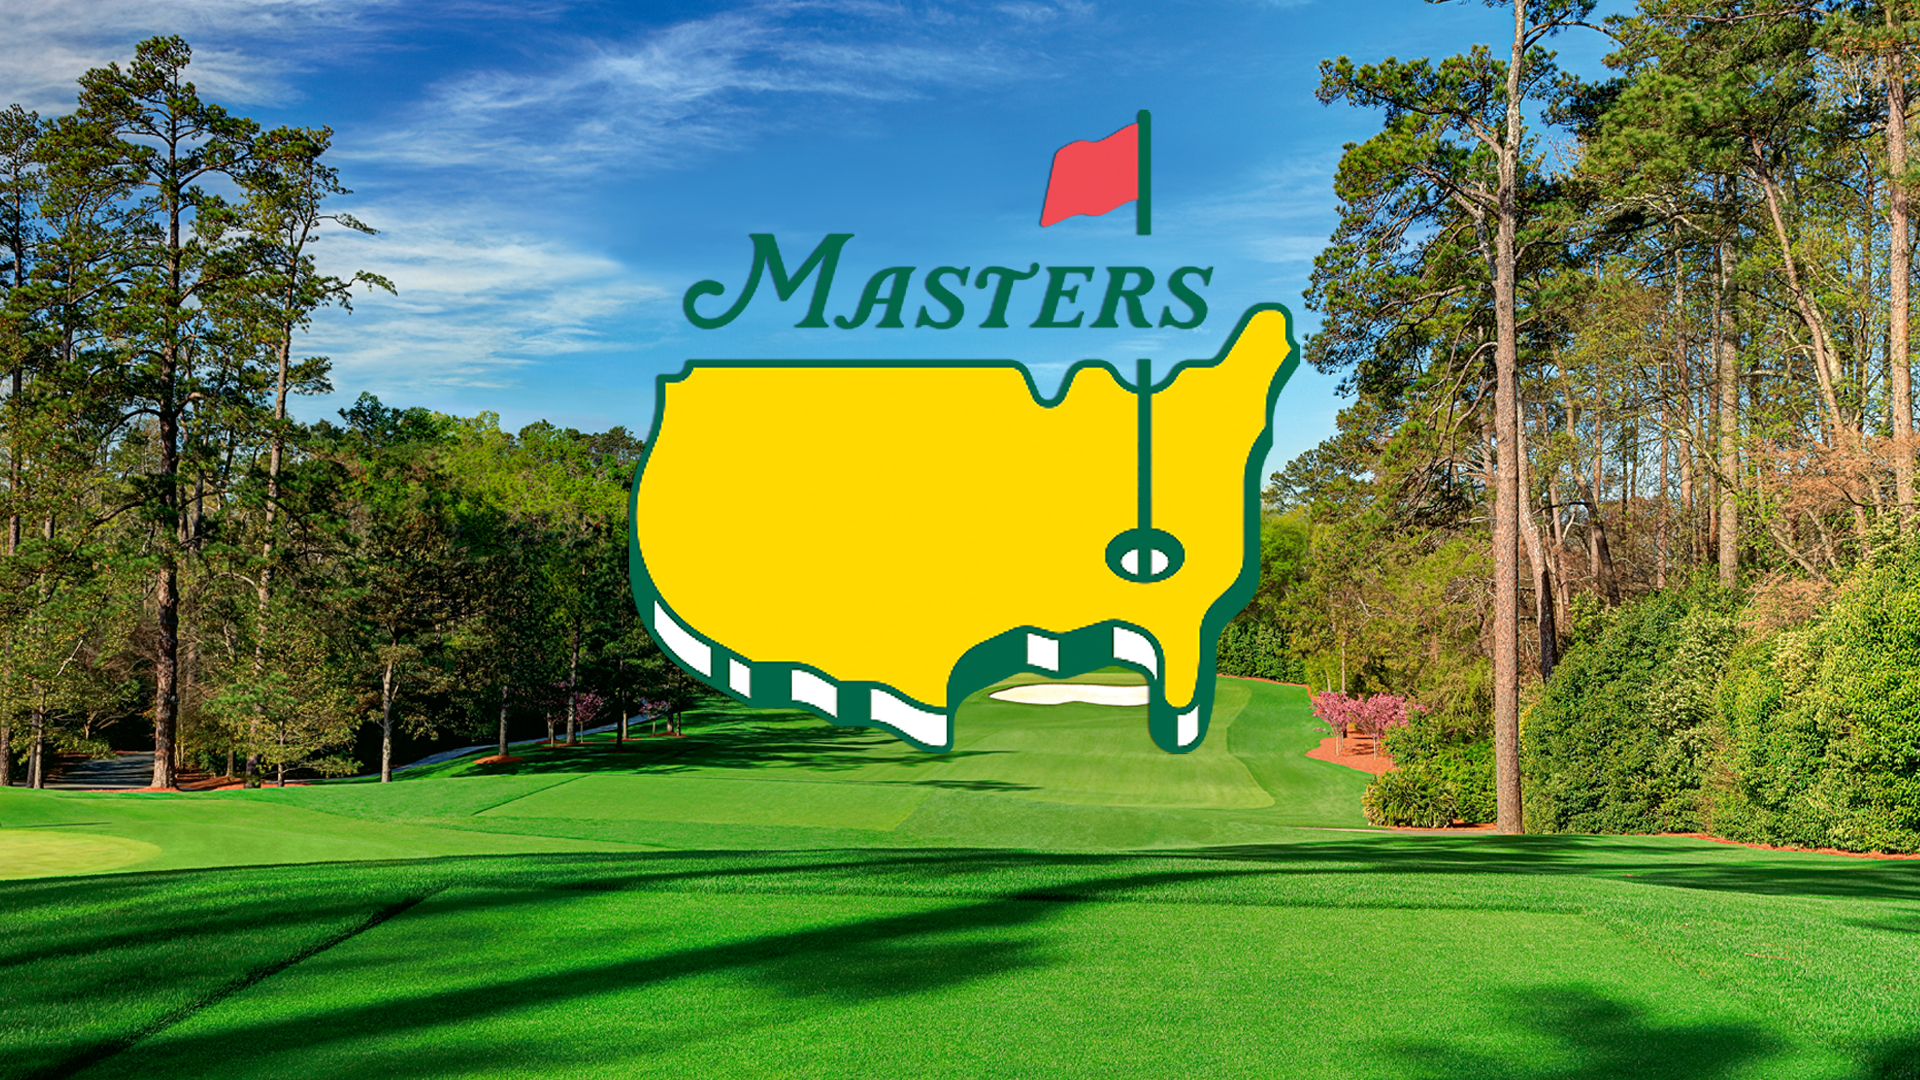 Augusta national golf club targeting november for masters tournament wcbd news